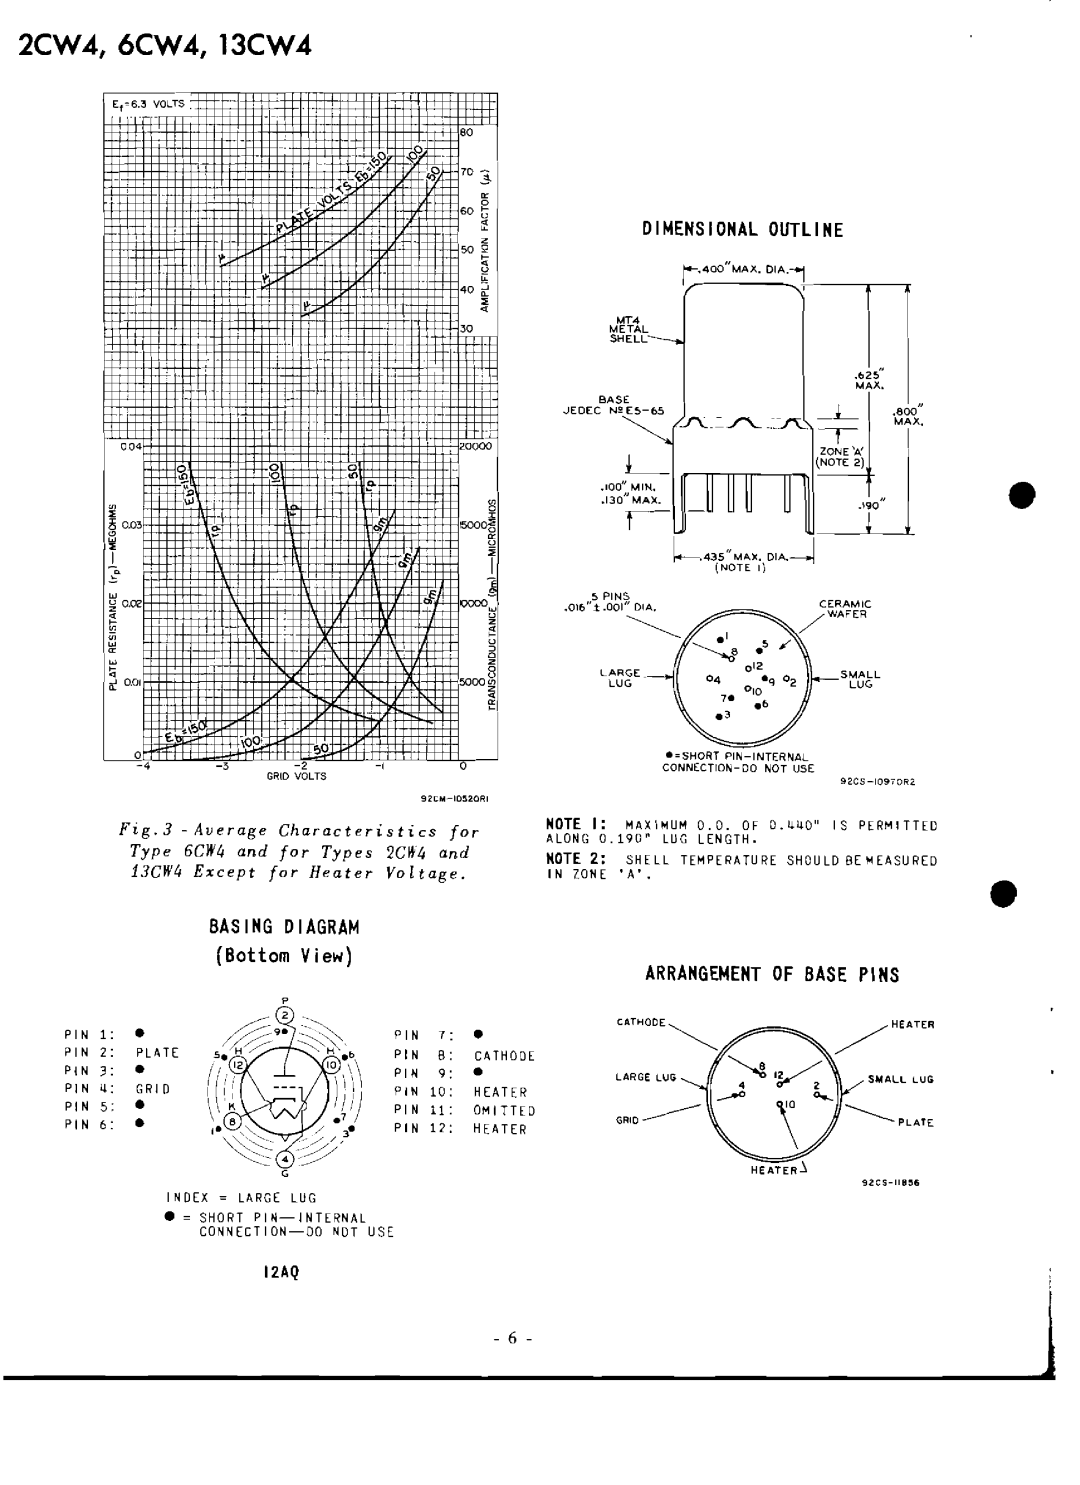 RCA 13CW4 Dimensional Outline, Basing Diagram, Arrangement Of Base Pins, 2CVV4, 6CVV4, 13CVV4, Bottom View, Trn--rr---,n 